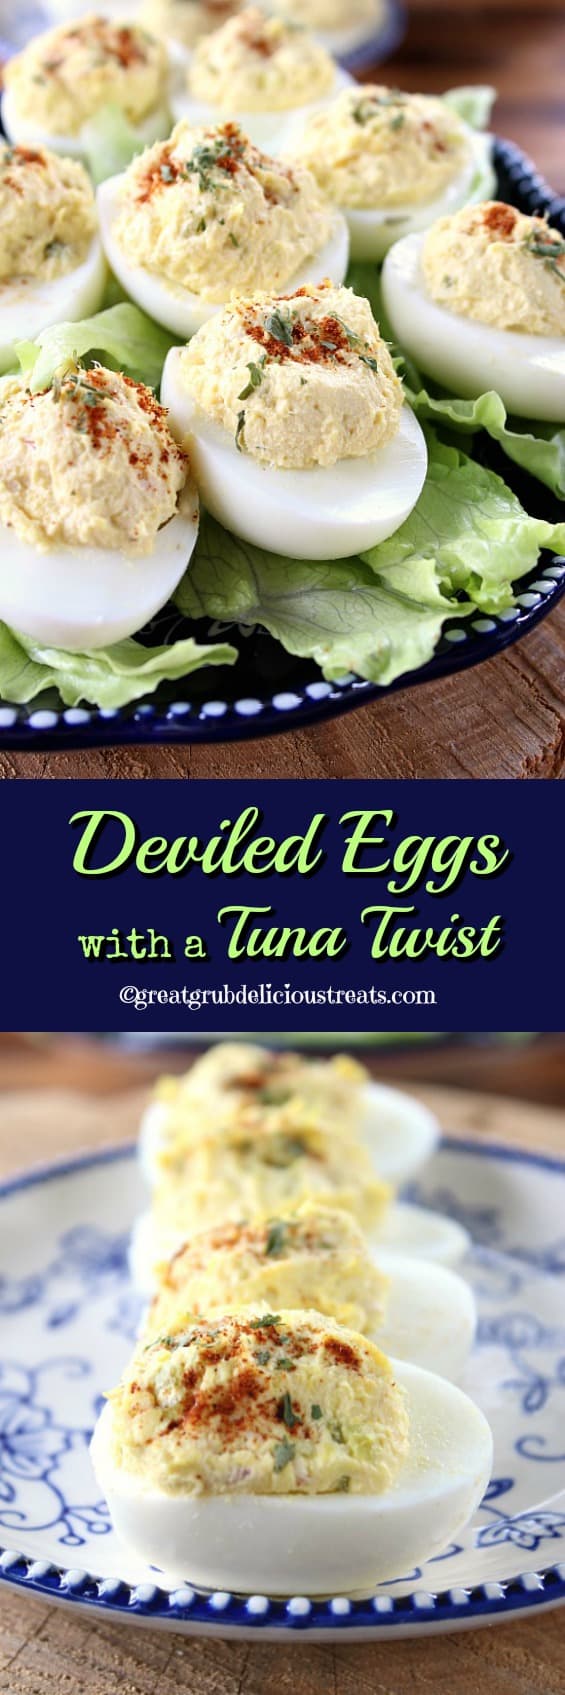 Deviled Eggs with a Tuna Twist